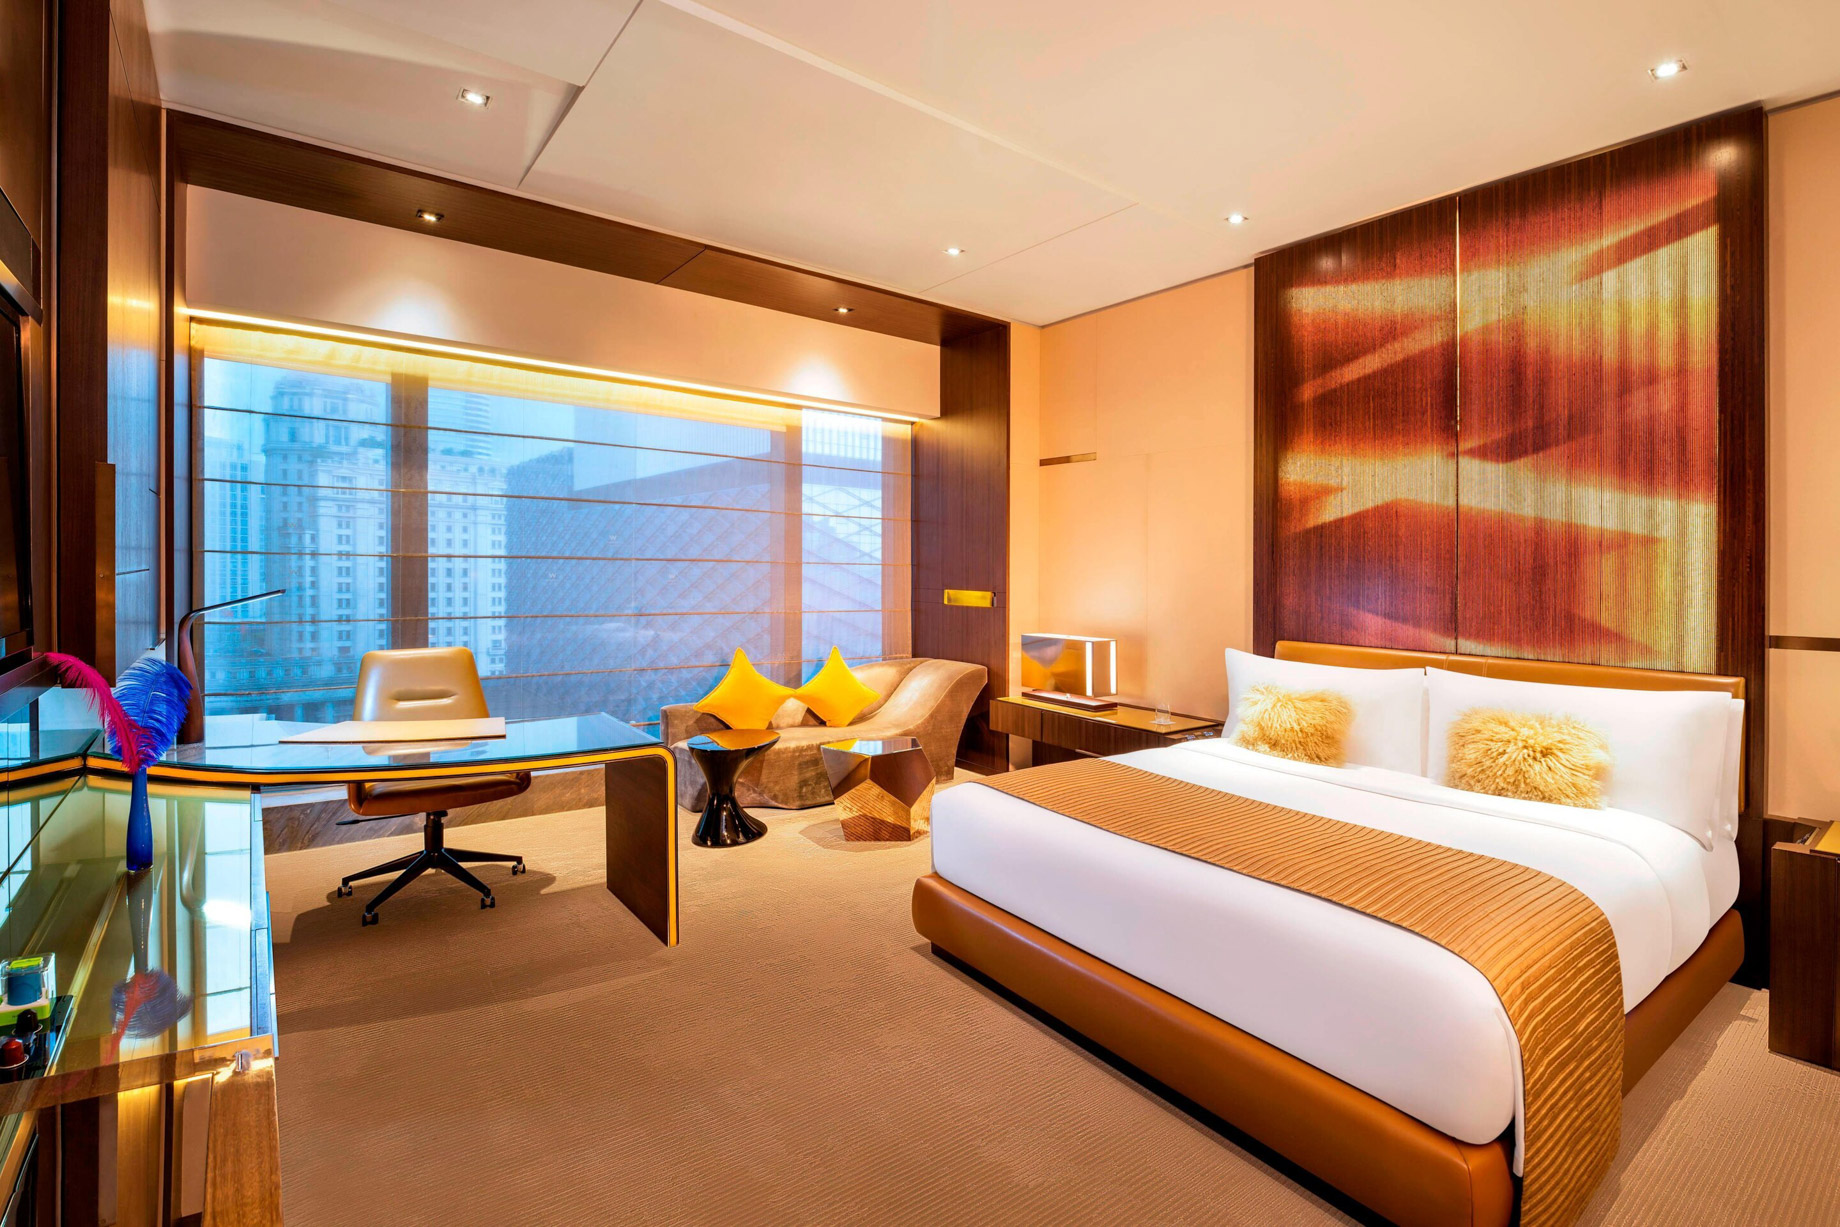 W Guangzhou Hotel – Tianhe District, Guangzhou, China – Spectacular Design Guest Room Fire